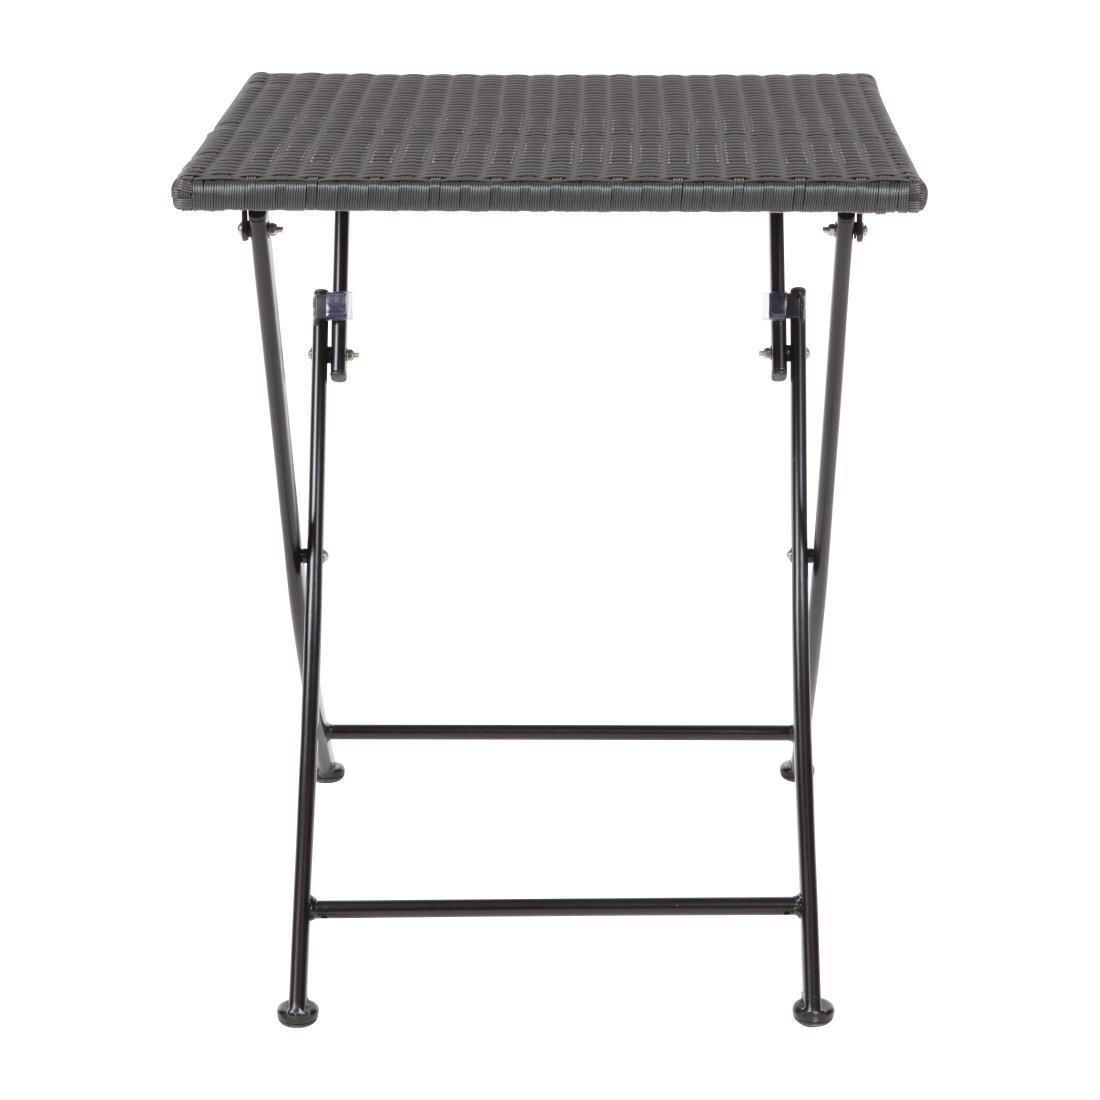 Bolero Square PE Wicker Folding Table Black 600mm - GL302  - 3